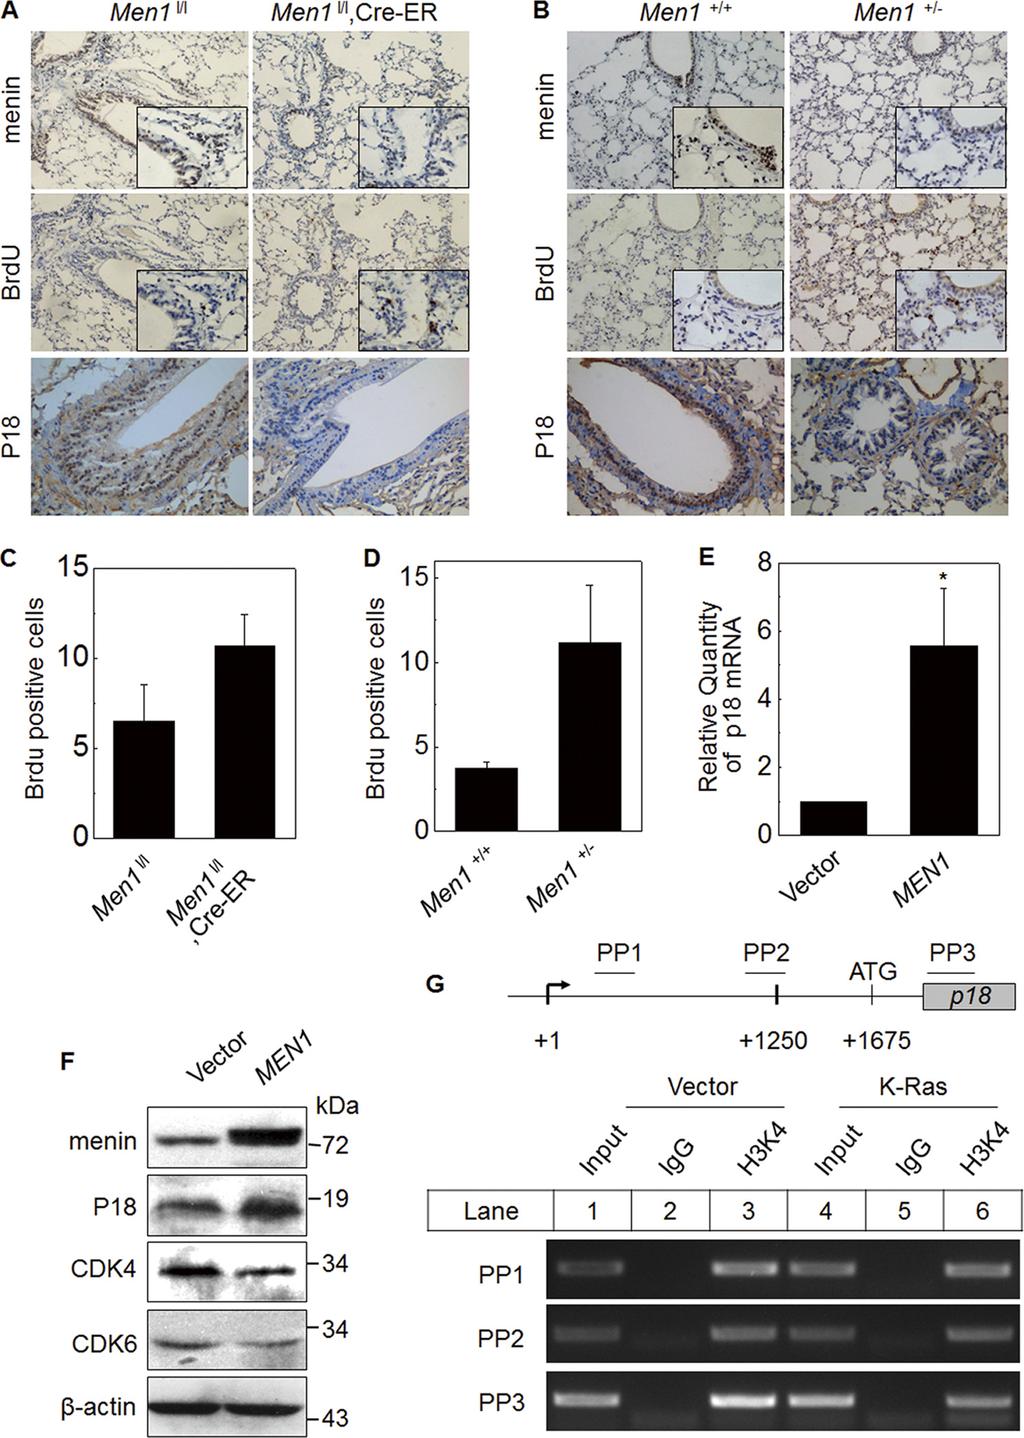 FIGURE 5. Men1 KO promotes lung epithelial cell proliferation.